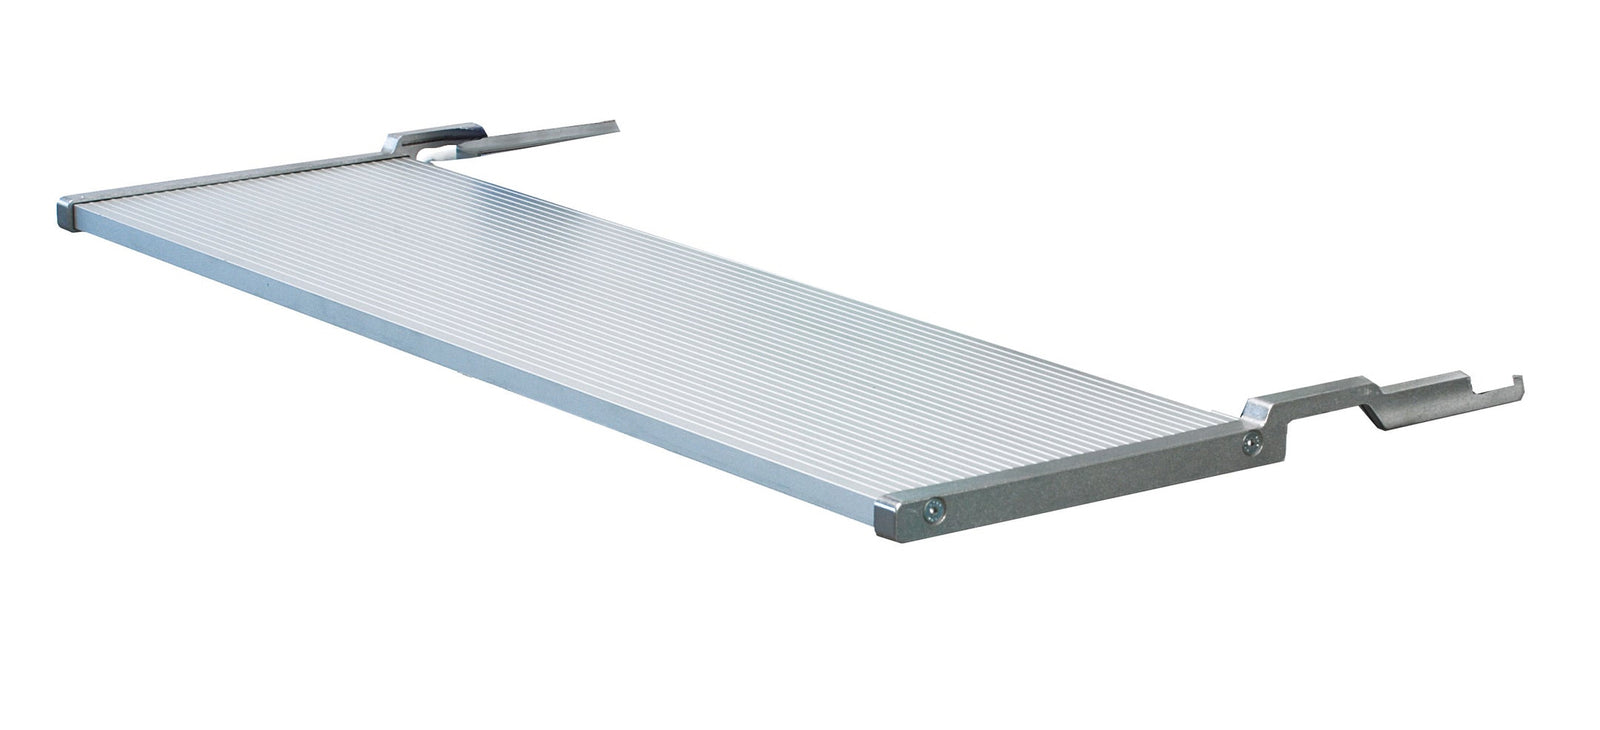 PN 1188179 - IMER Combi 250/1500 Tile Saw - Side Table Complete